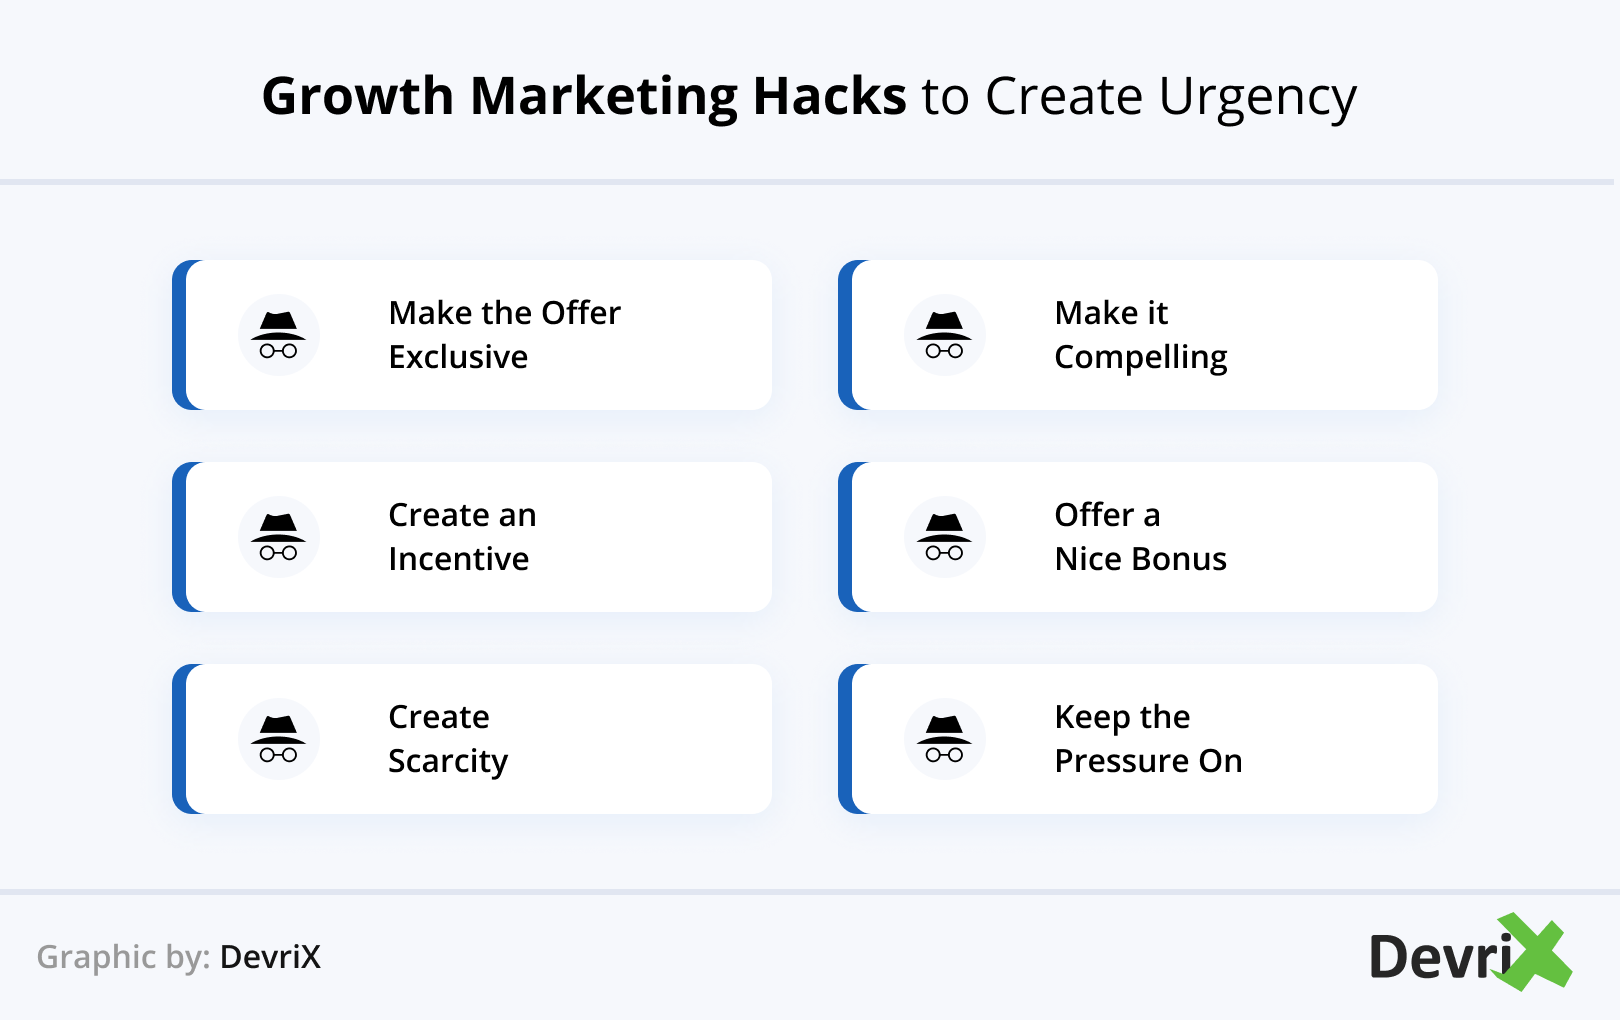 Growth Marketing Hacks to Create Urgency